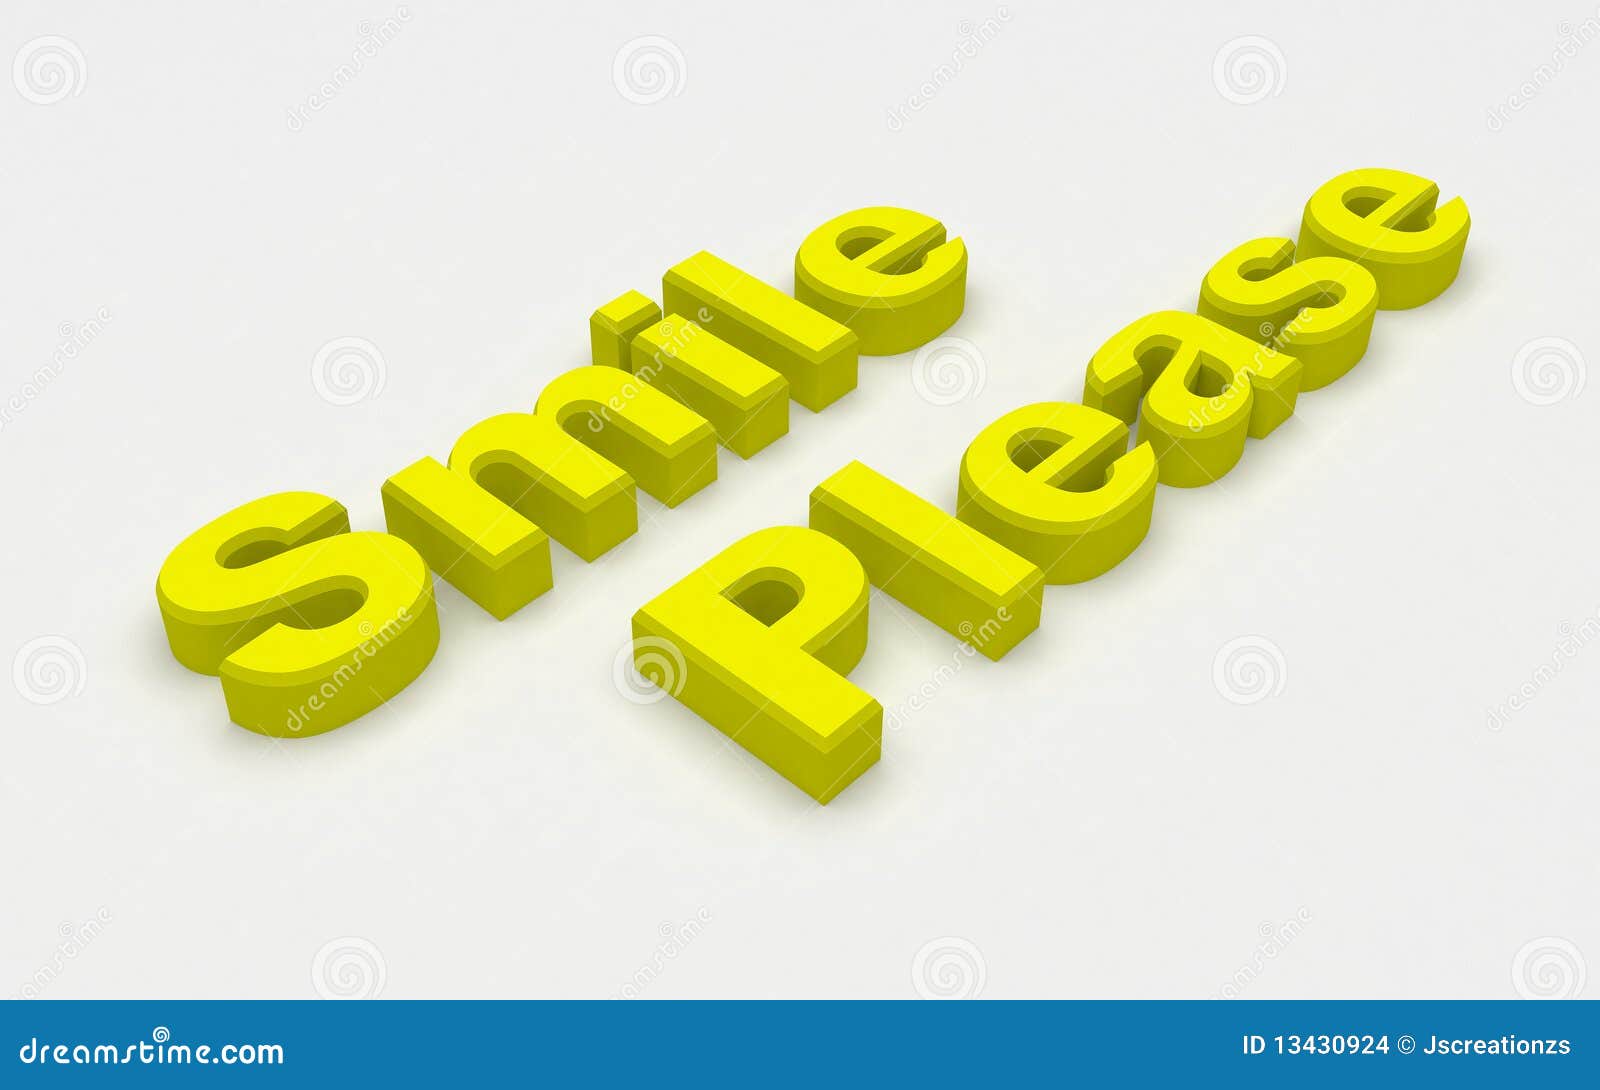 Smile please stock illustration. Illustration of vector - 13430924